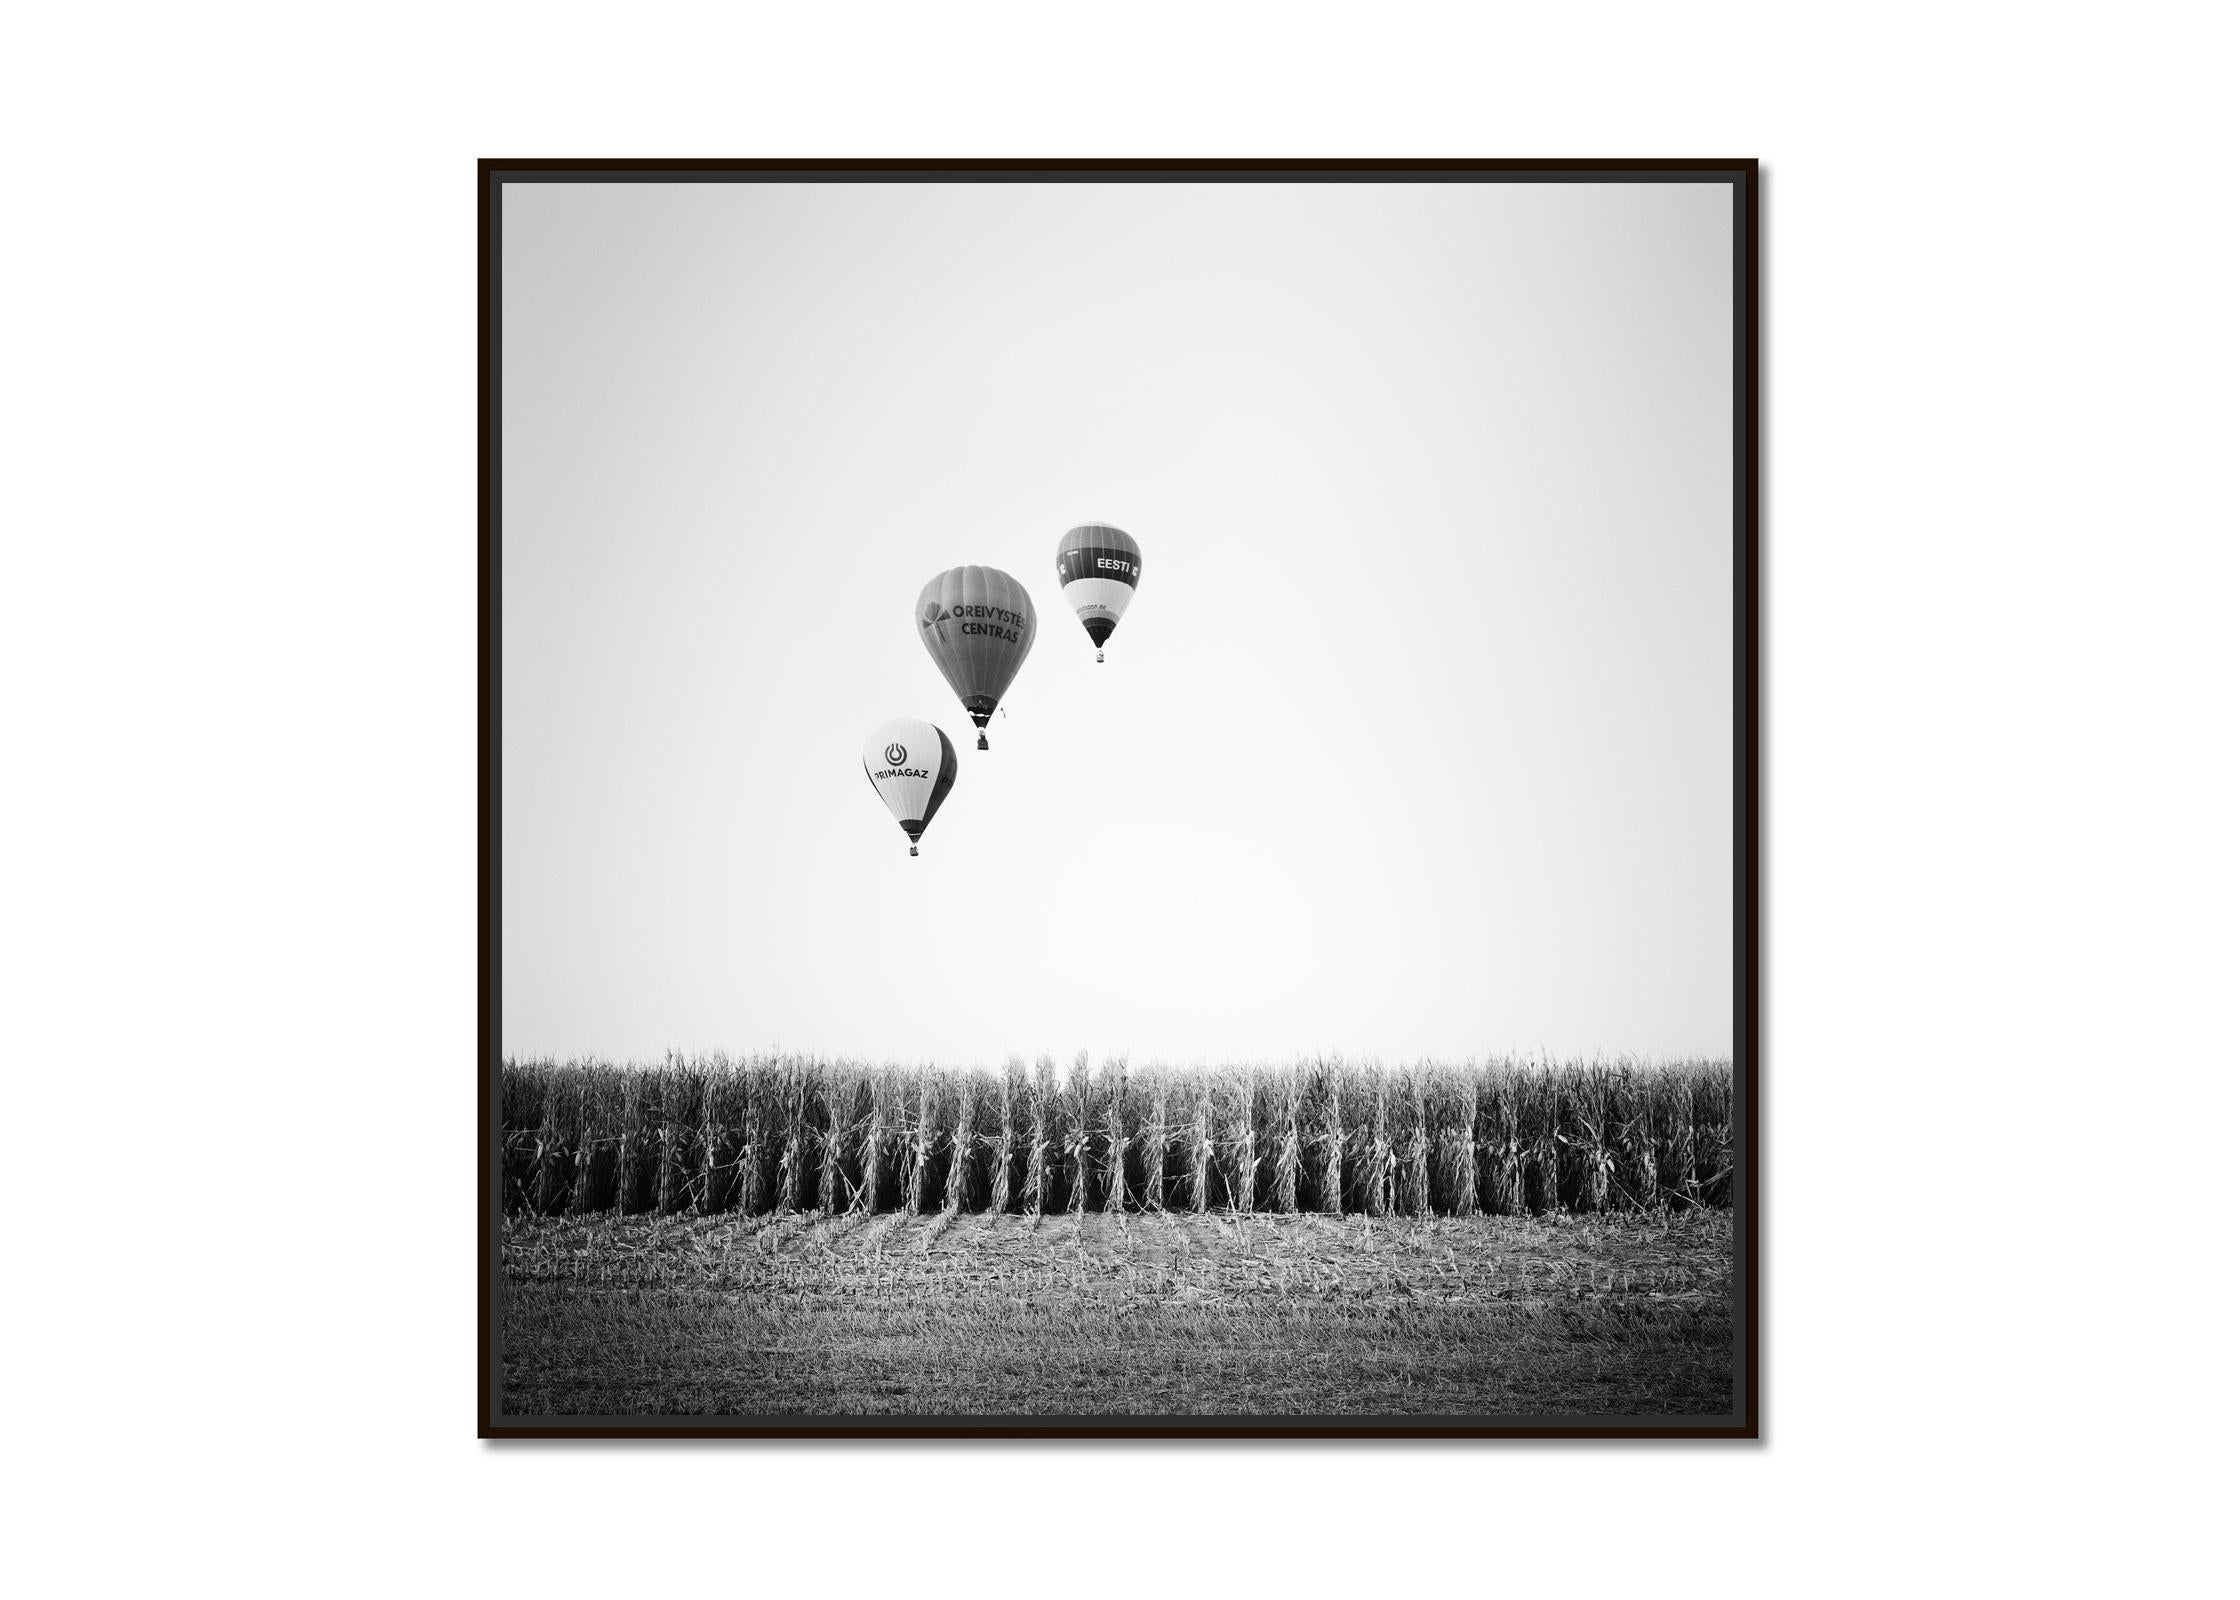 Hot Air Balloon, Cornfield, Championship, Austria, Black White landscape Photo - Photograph by Gerald Berghammer